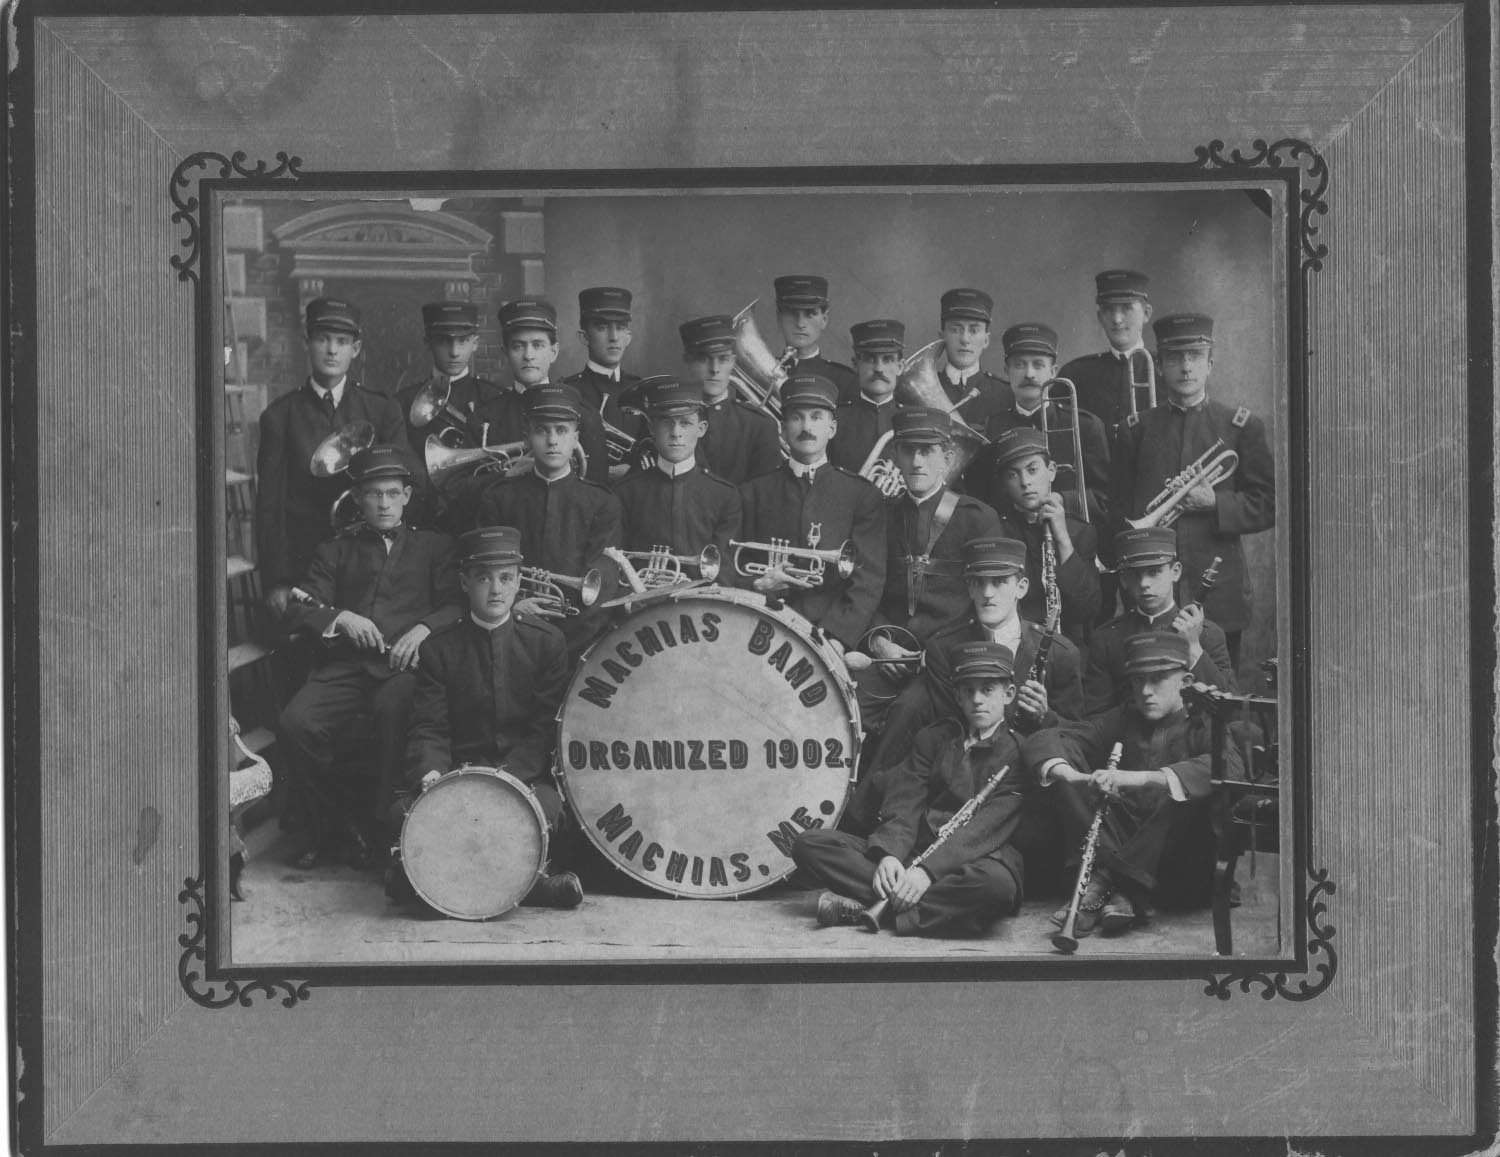 Machias Maine Band Organized 1902